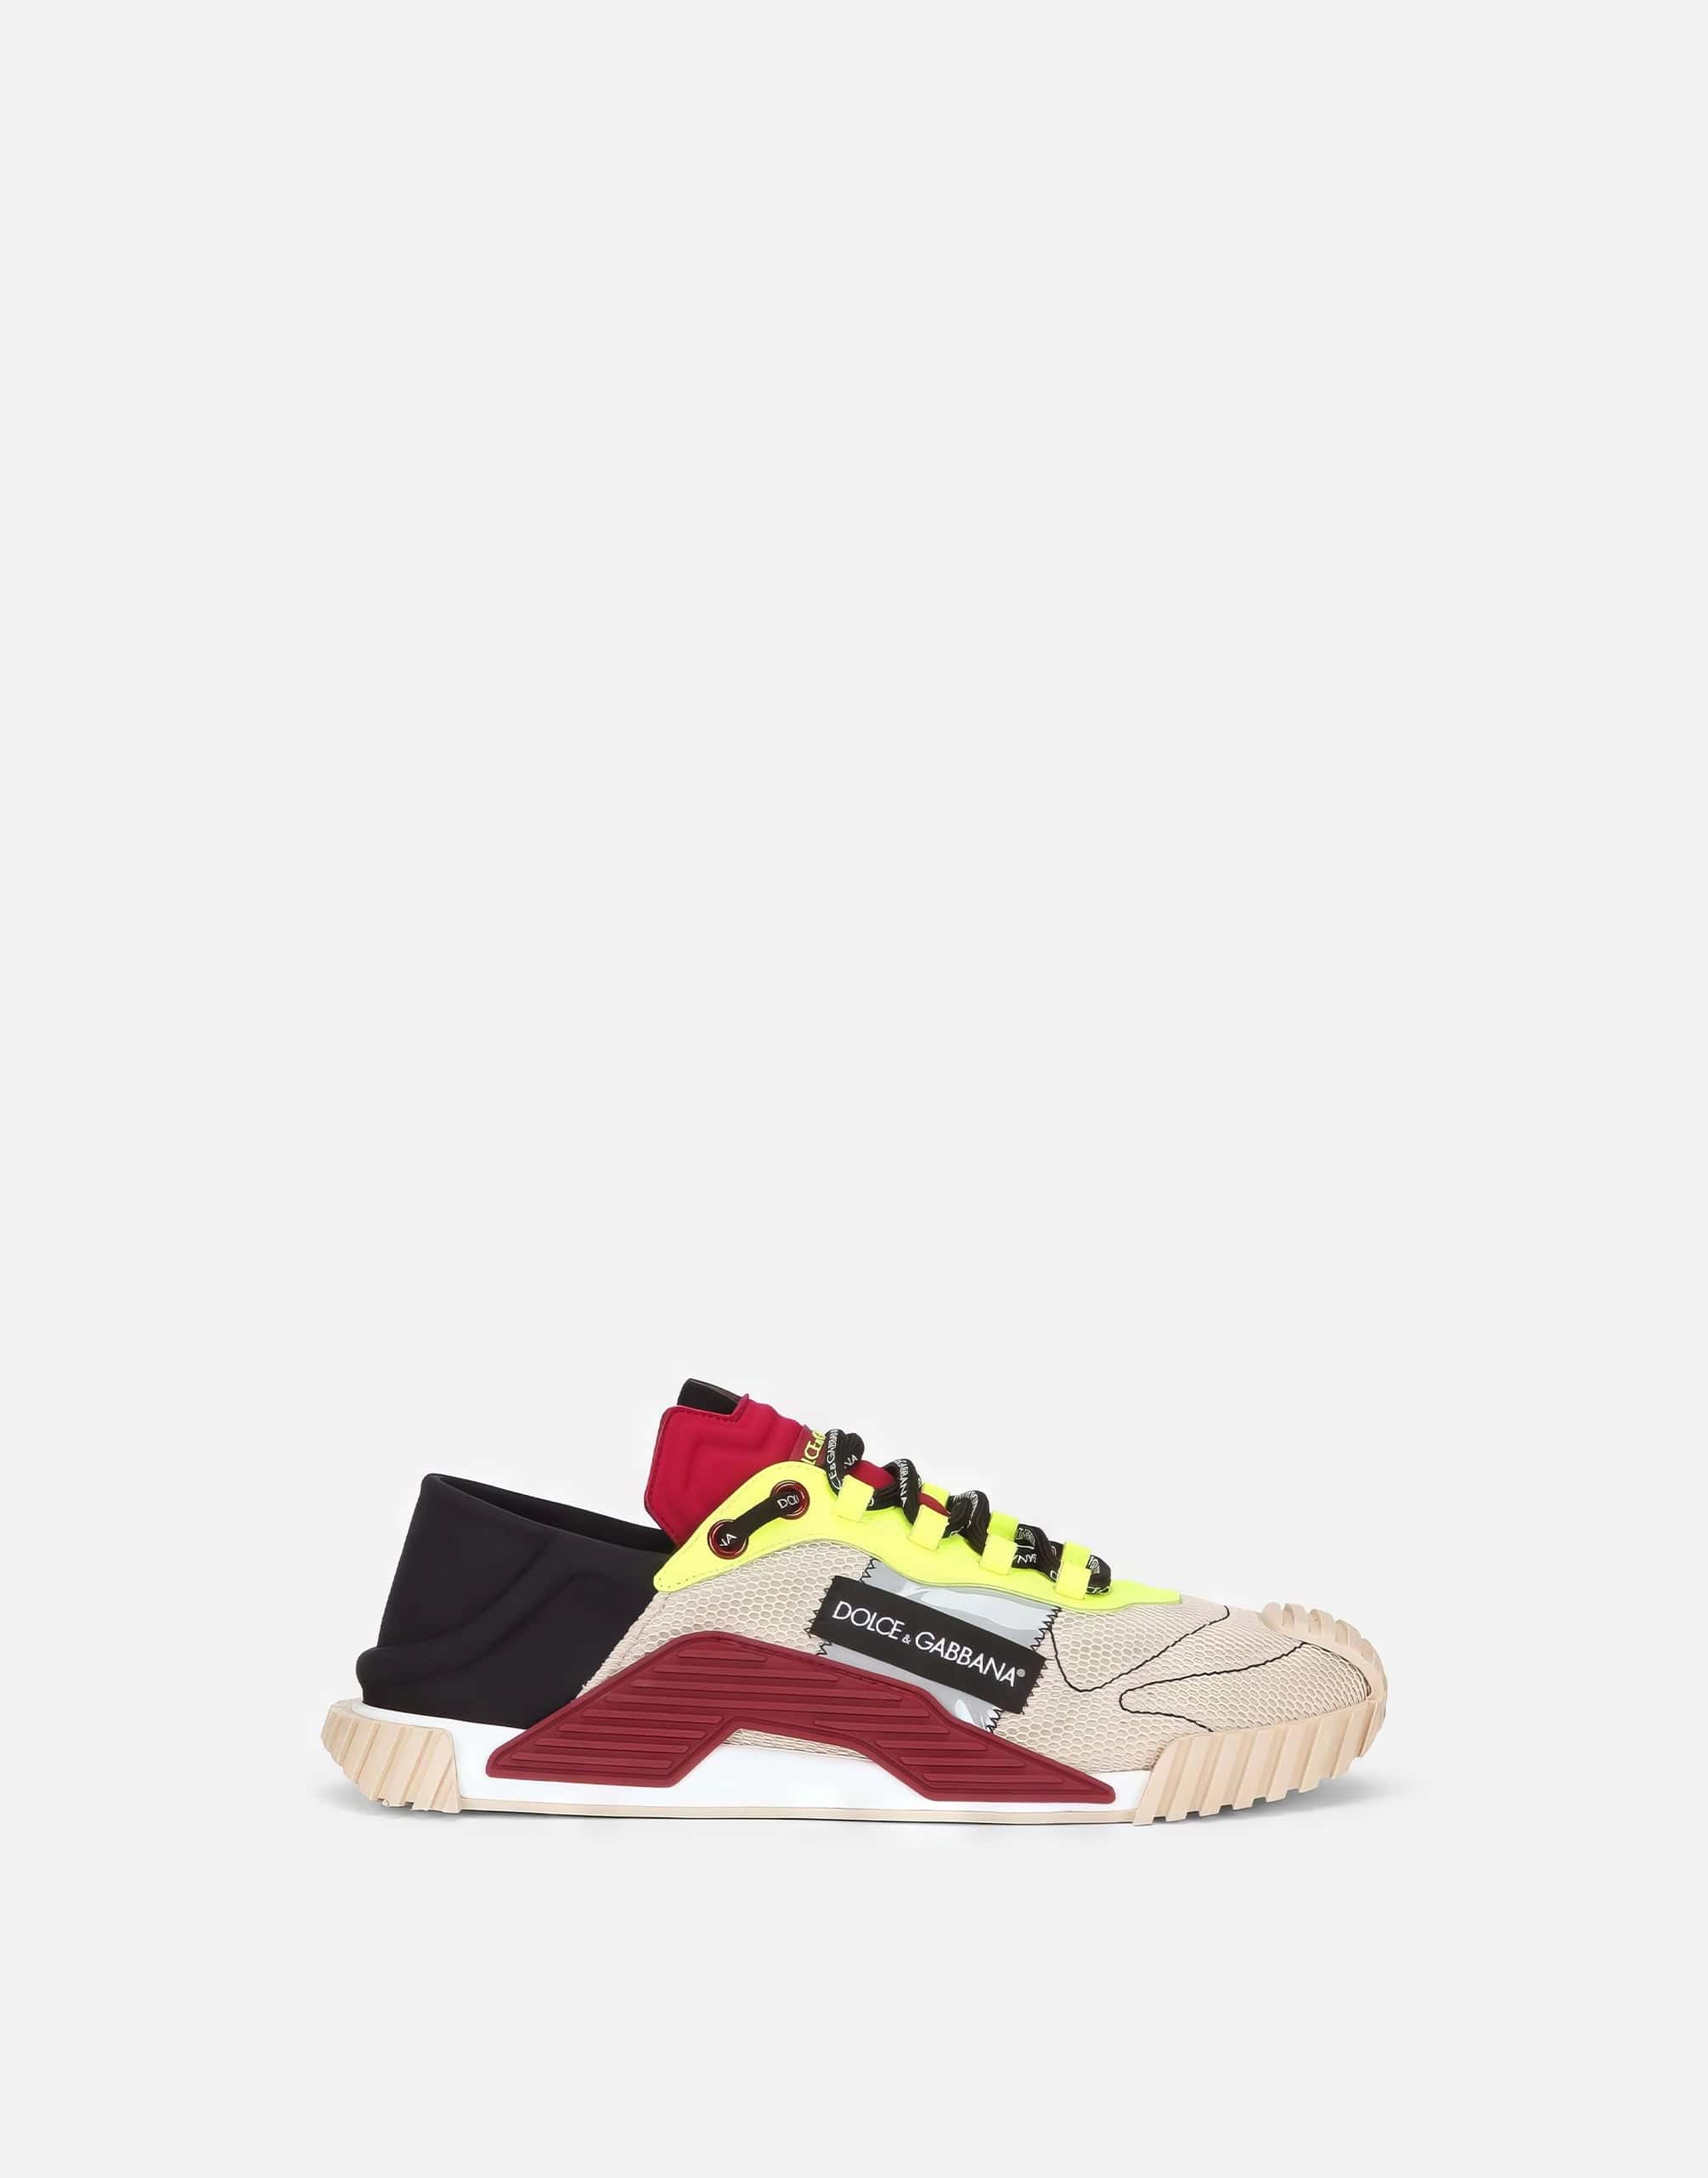 Dolce & Gabbana NS1 Slip-On Sneakers